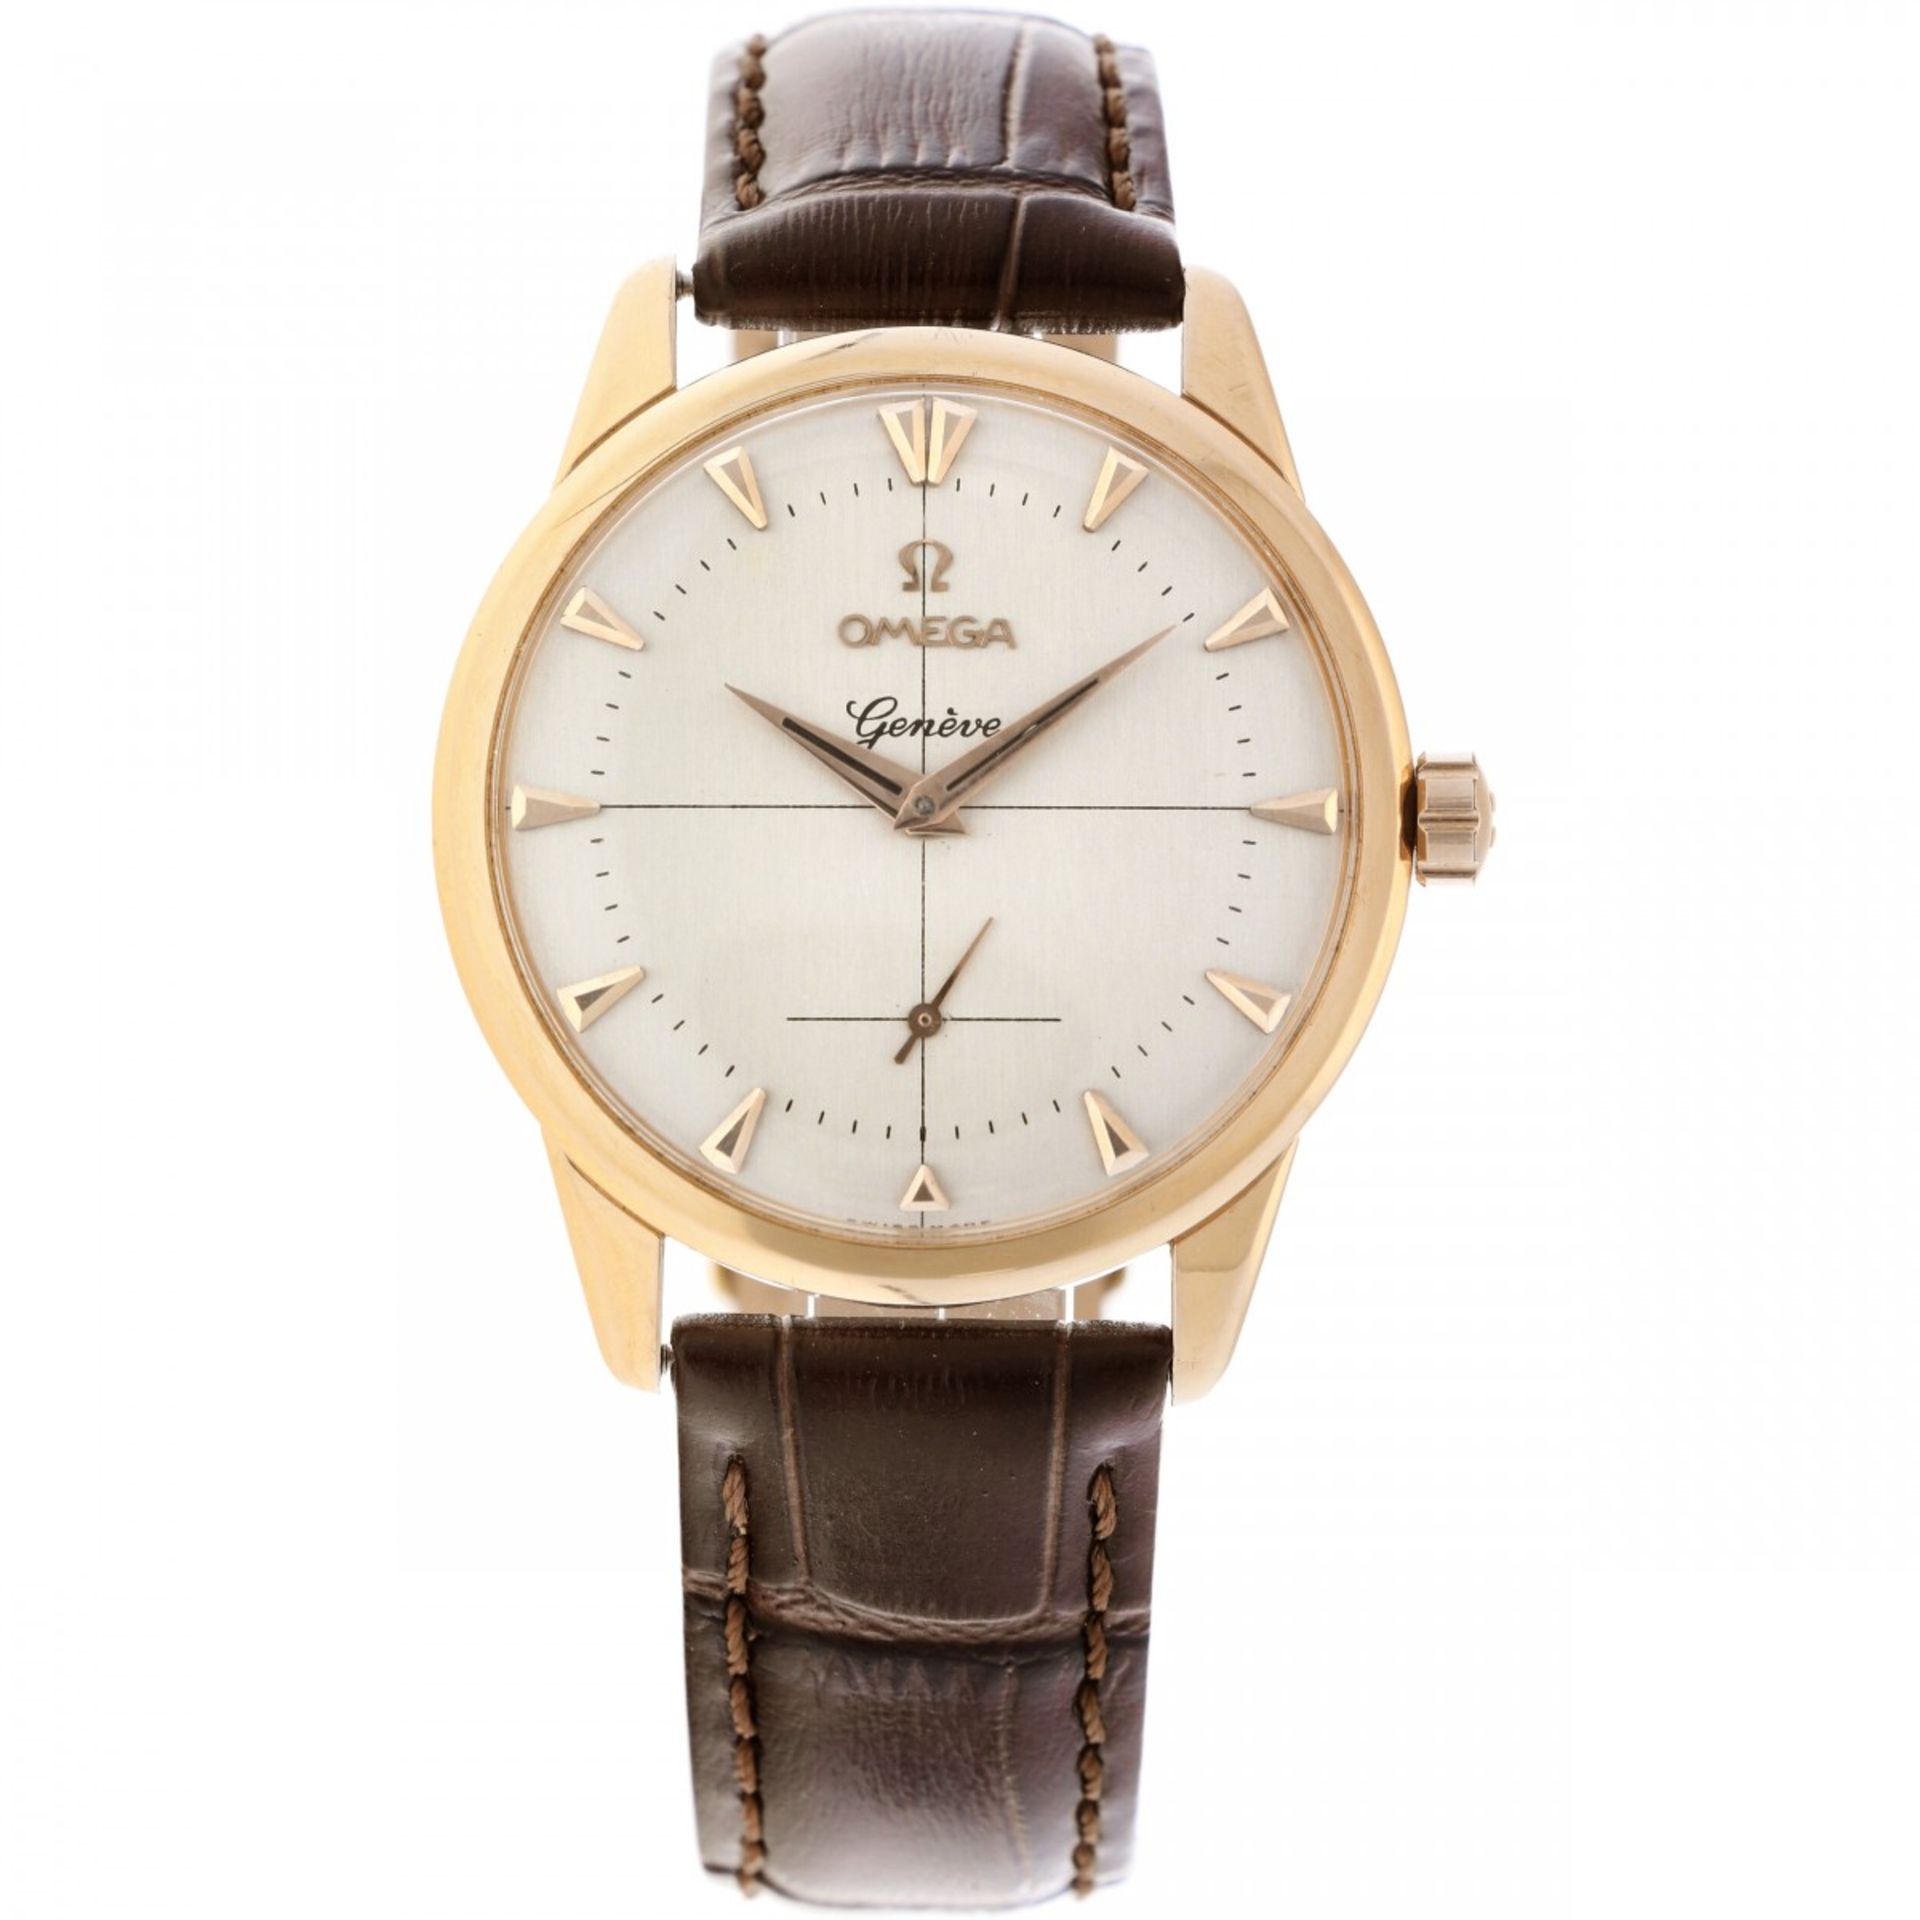 Omega Genéve Jumbo 2904 - Men's watch - ca. 1958